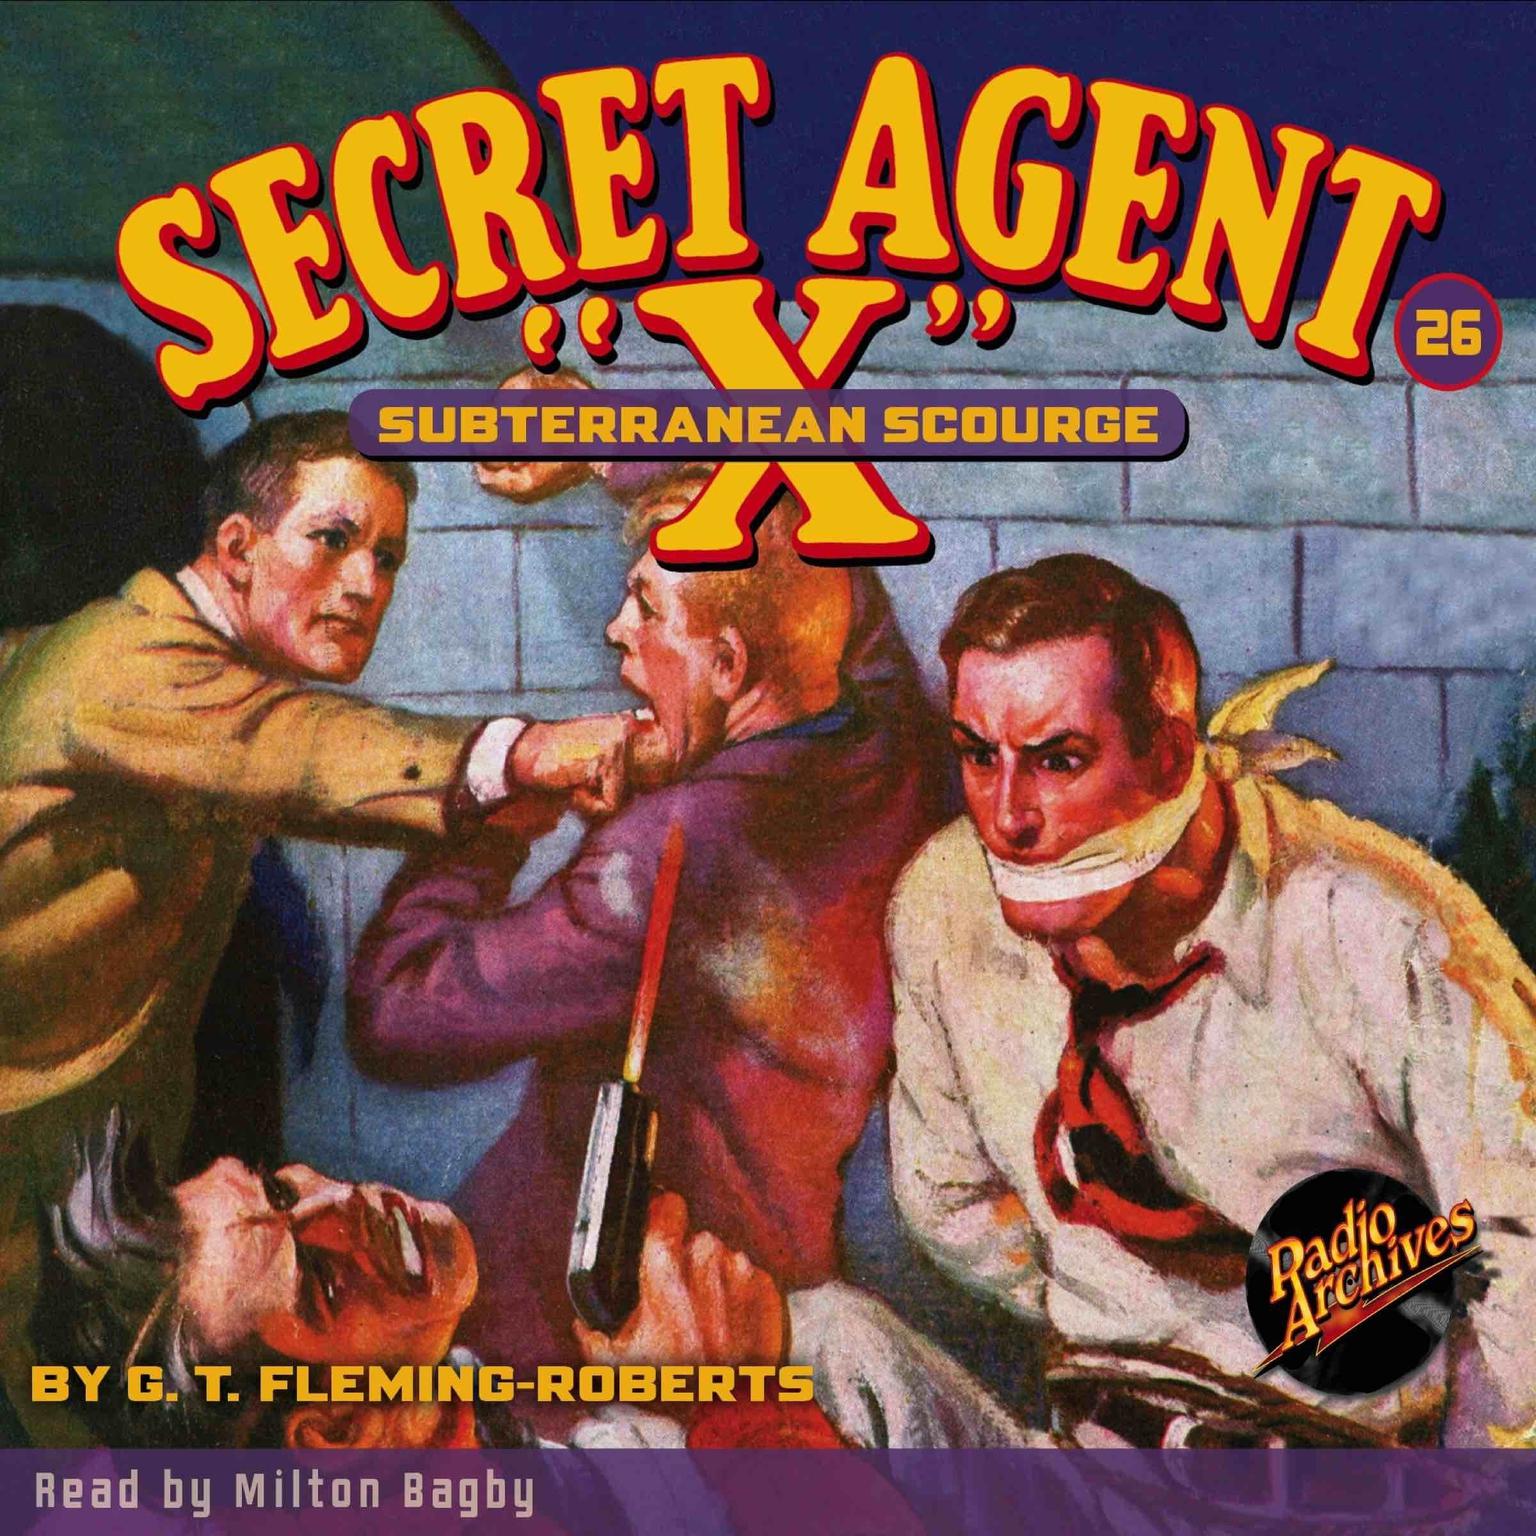 Secret Agent X: Subterranean Scourge Audiobook, by G. T. Fleming-Roberts